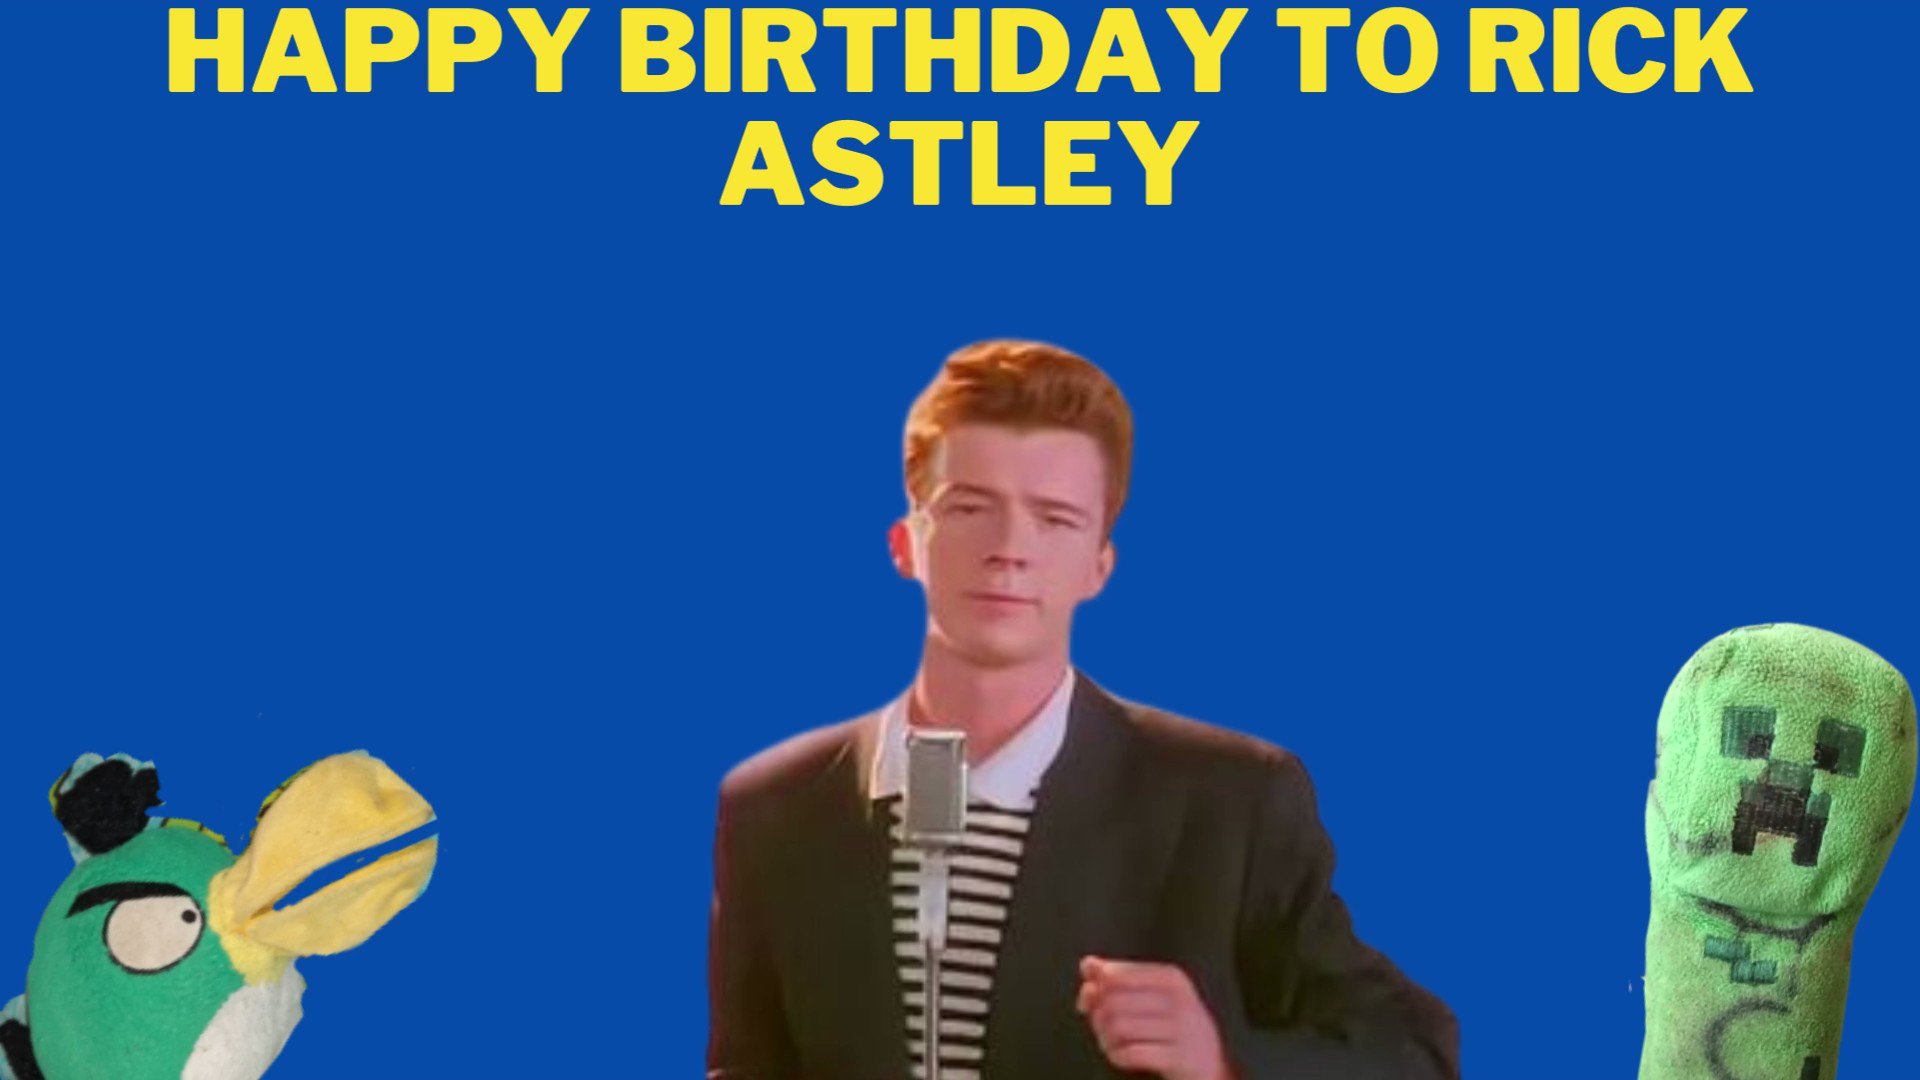 Happy birthday to Rick Astley 